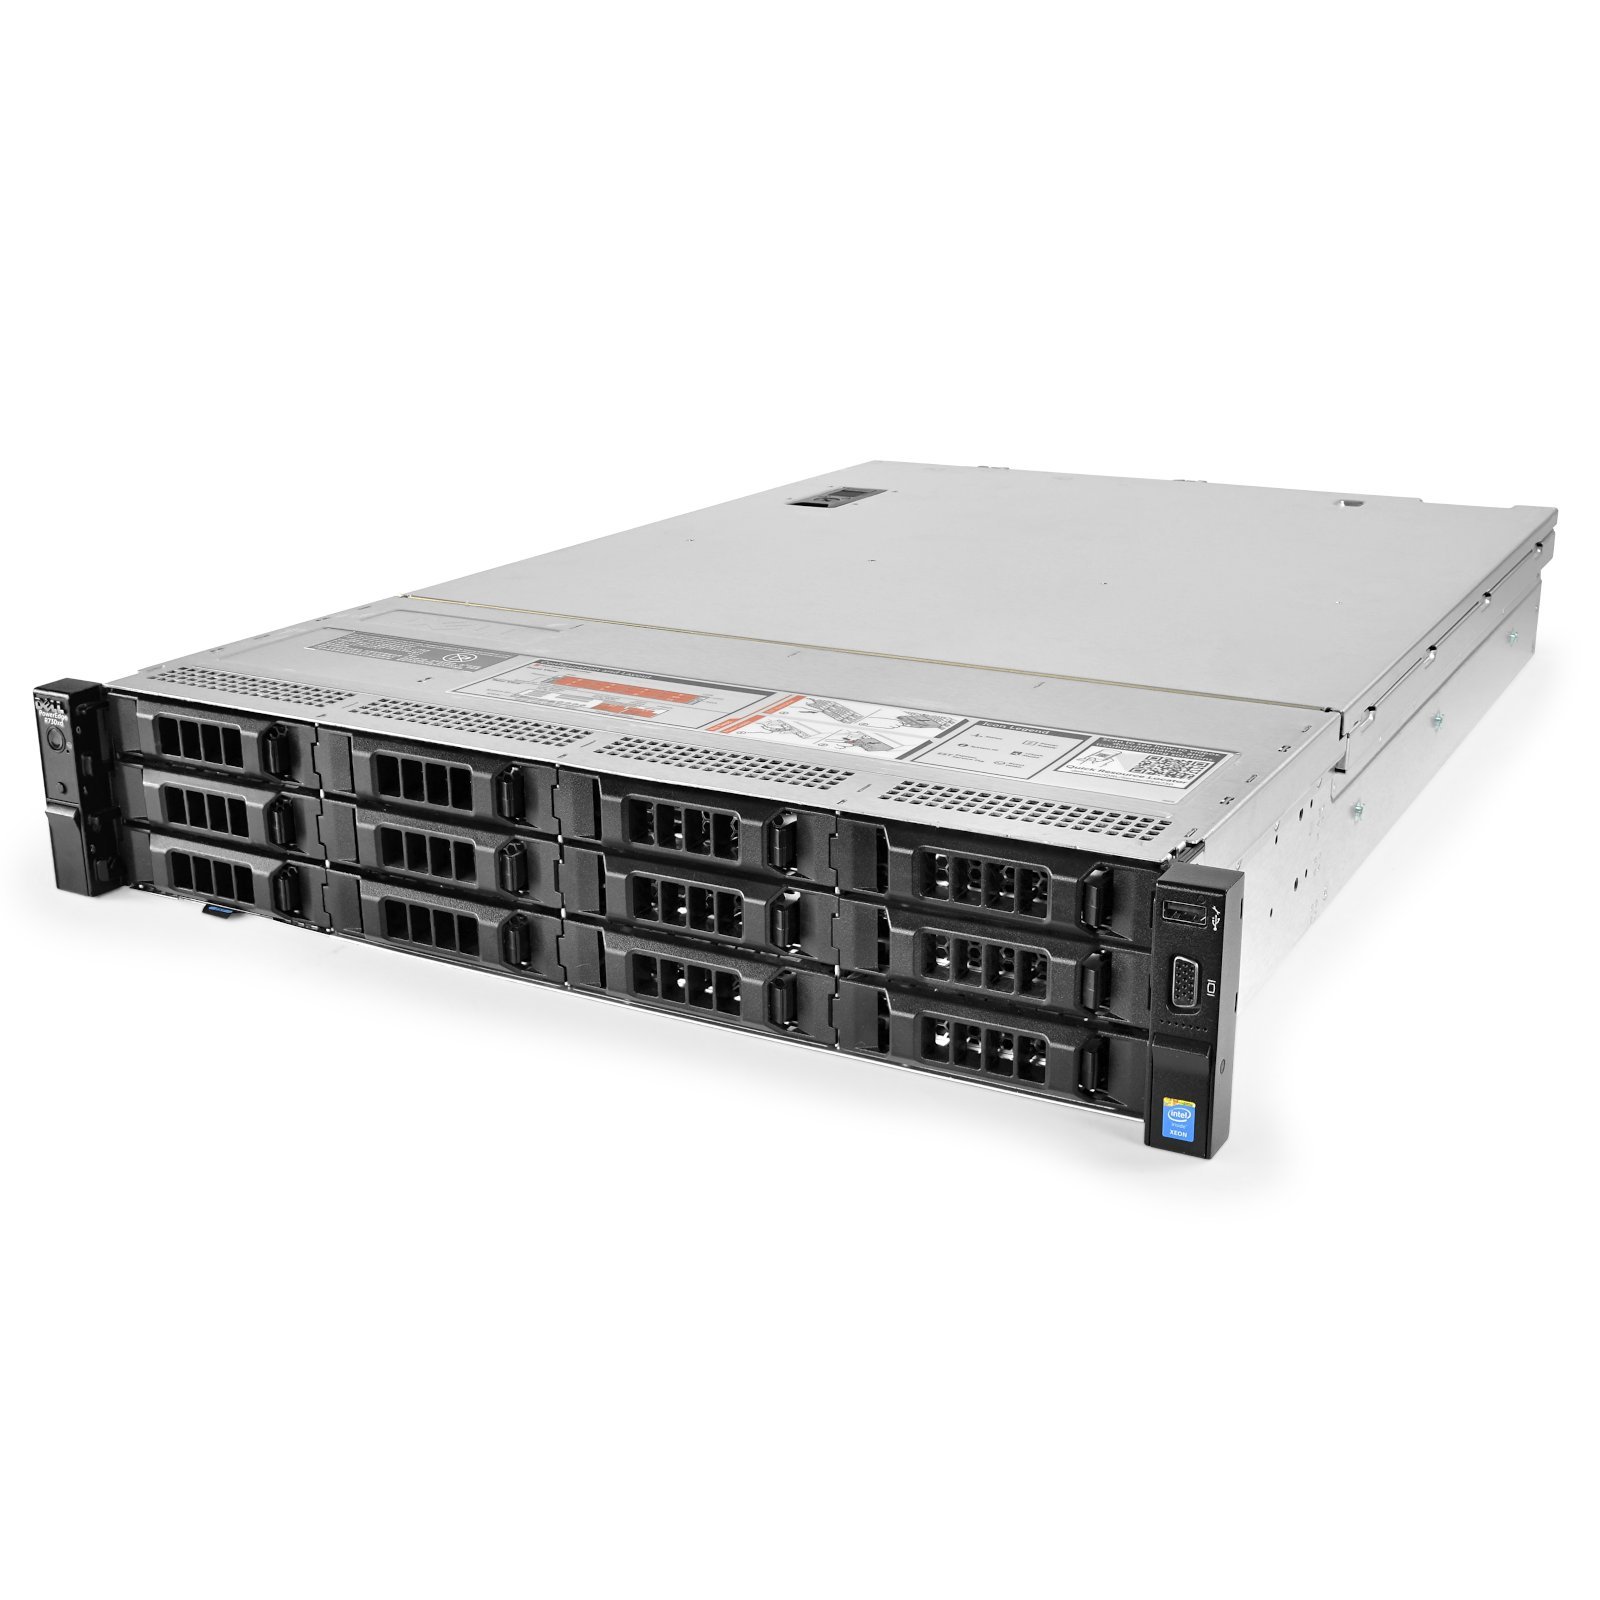 Подробное фото Сервер DELL PowerEdge R730XD 2x Xeon E5-2690v3 128Gb 2133P DDR4 12x noHDD 3.5" SAS RAID Perc H730 mini, 1024Mb, 2*PSU 750W